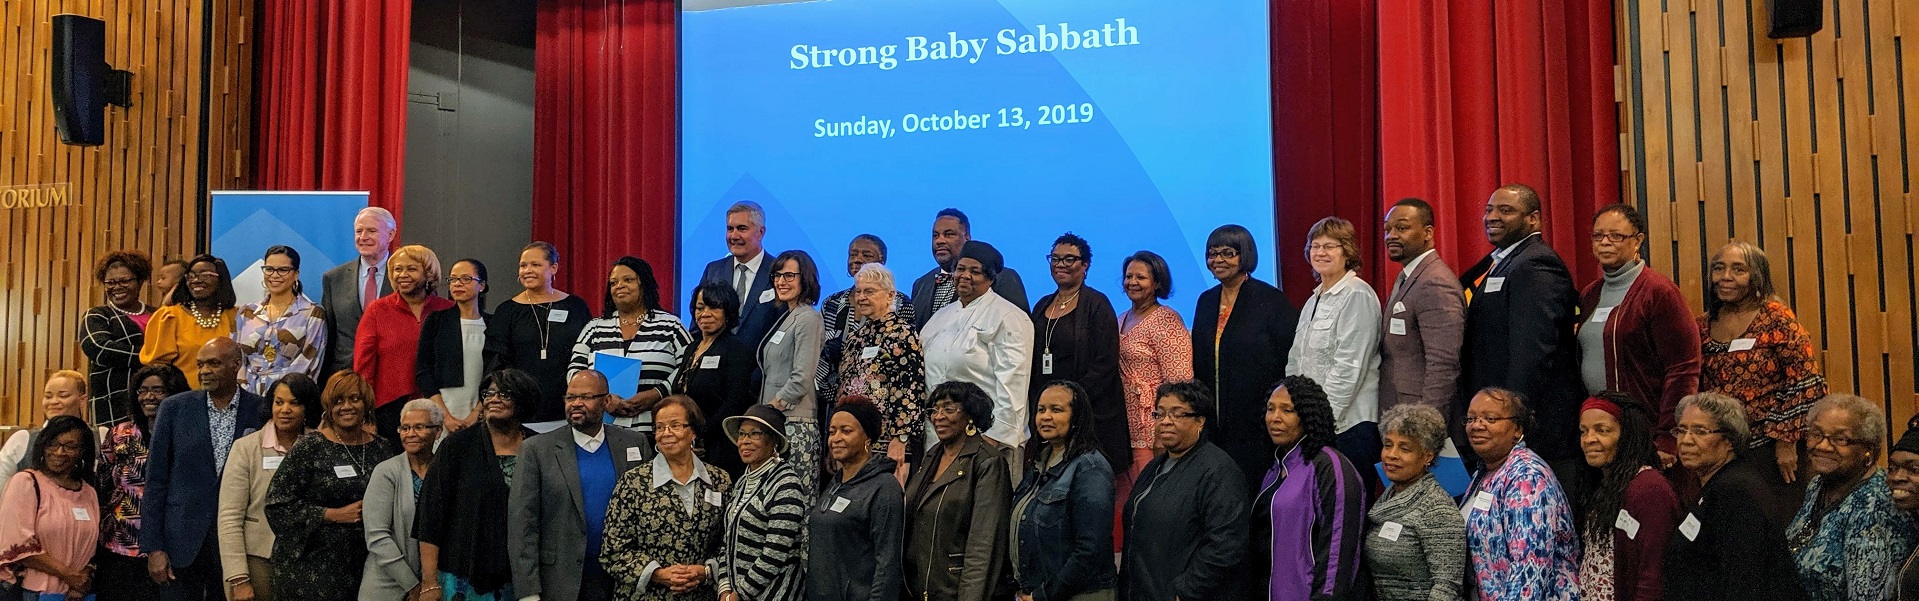 Strong Baby Sabbath